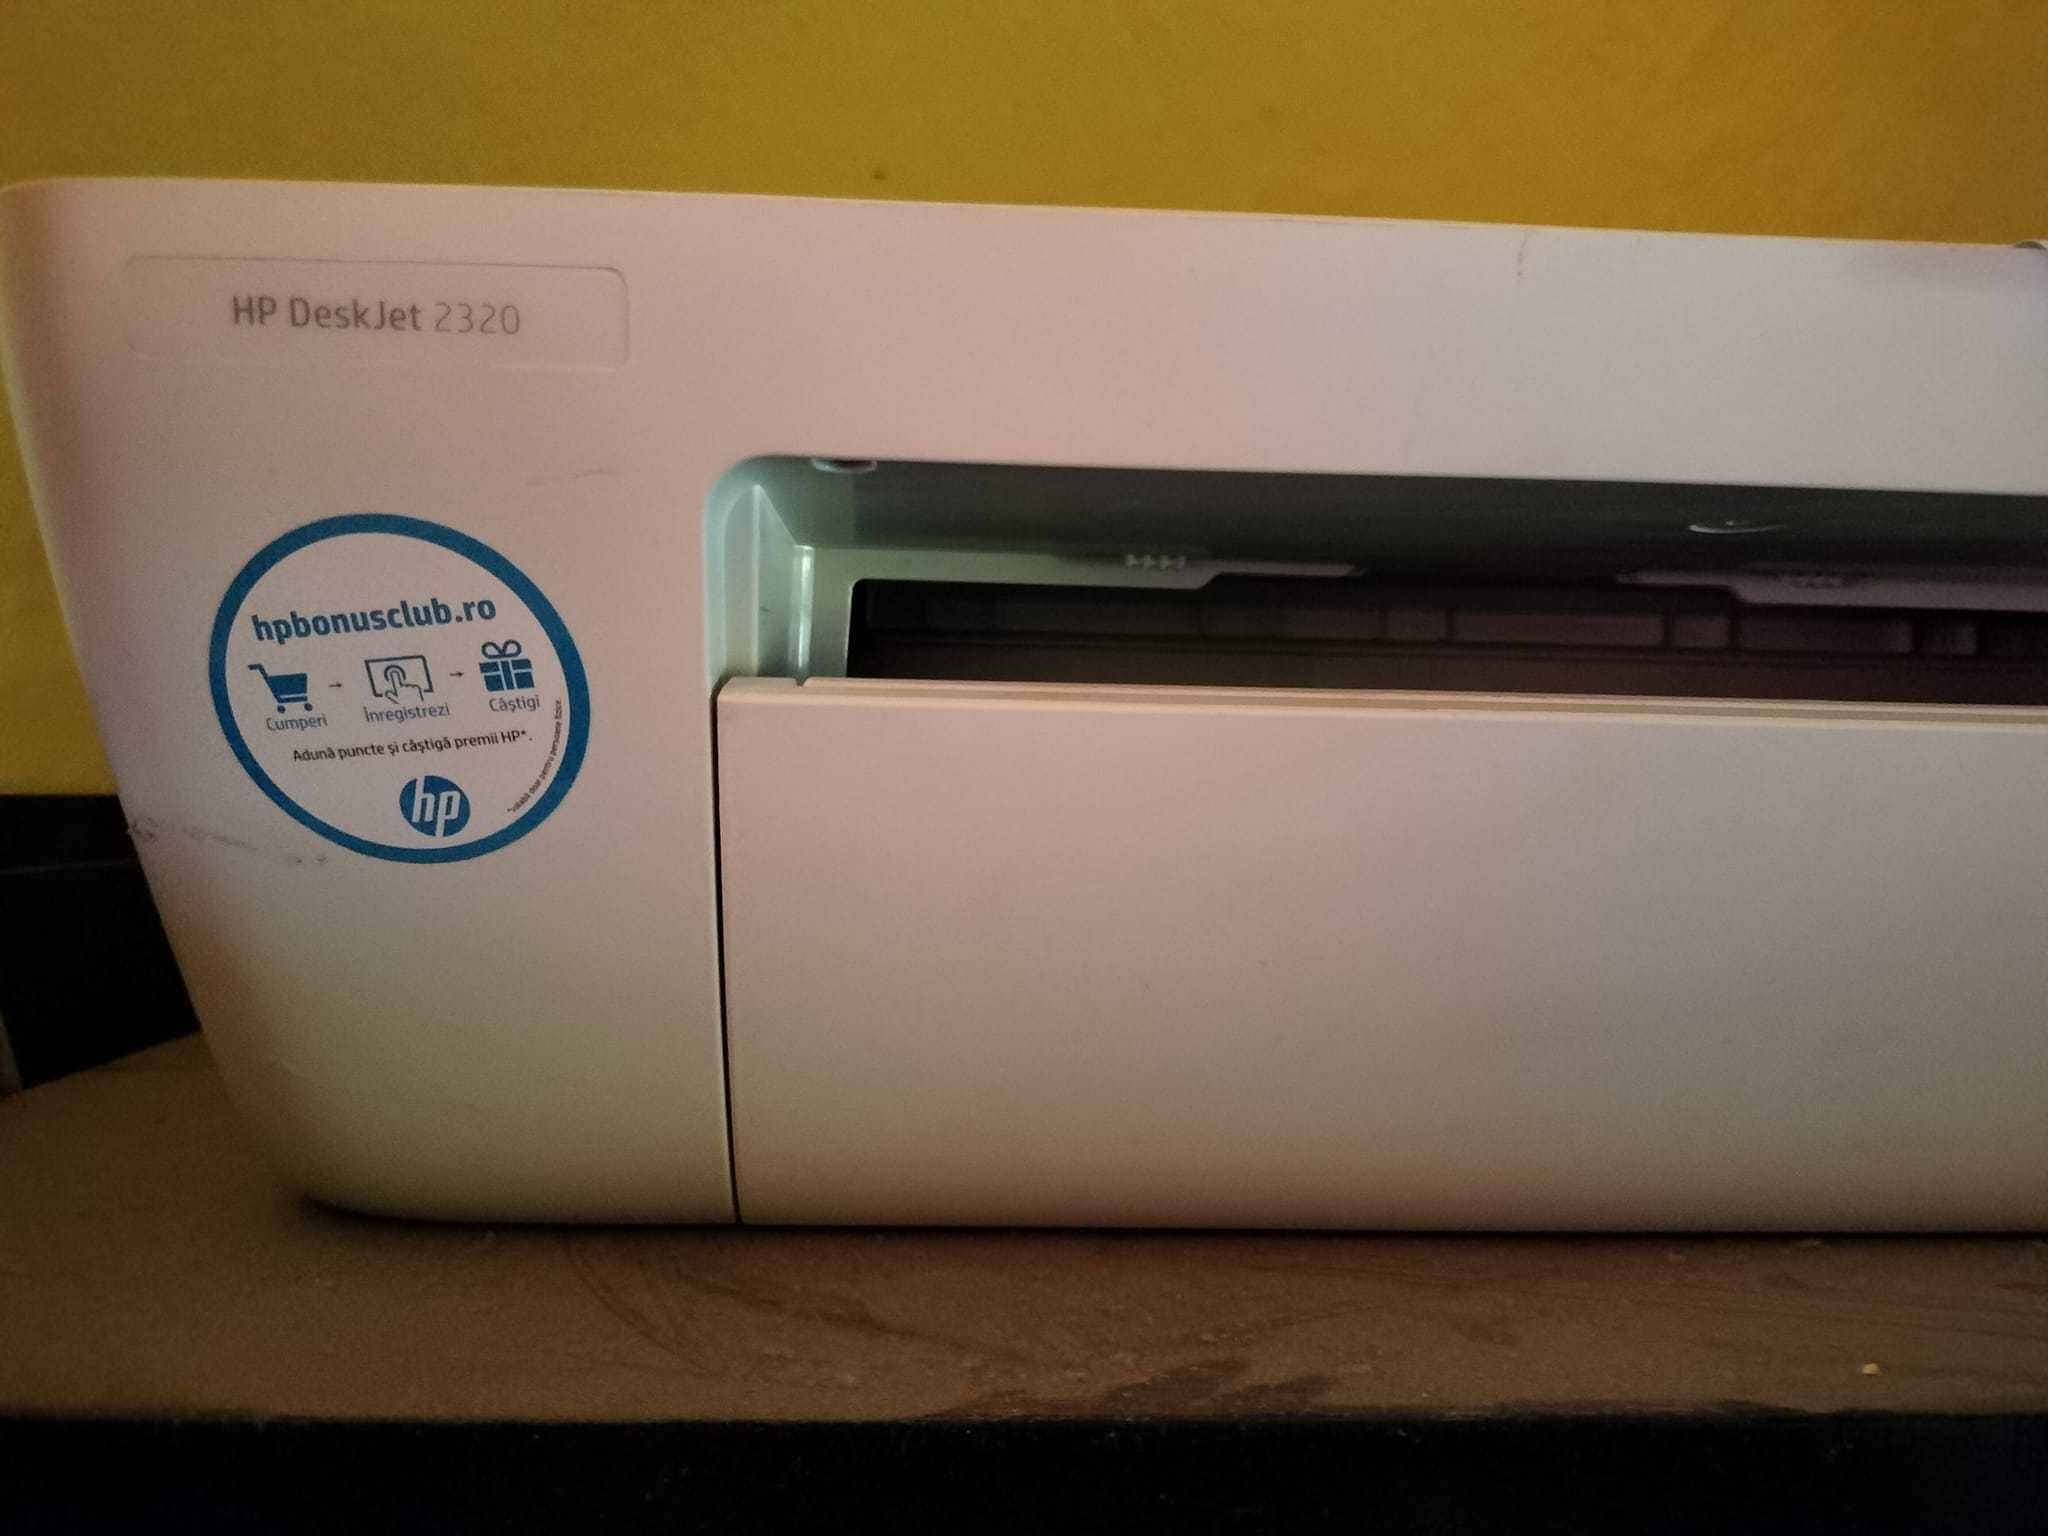 Imprimanta cu scaner